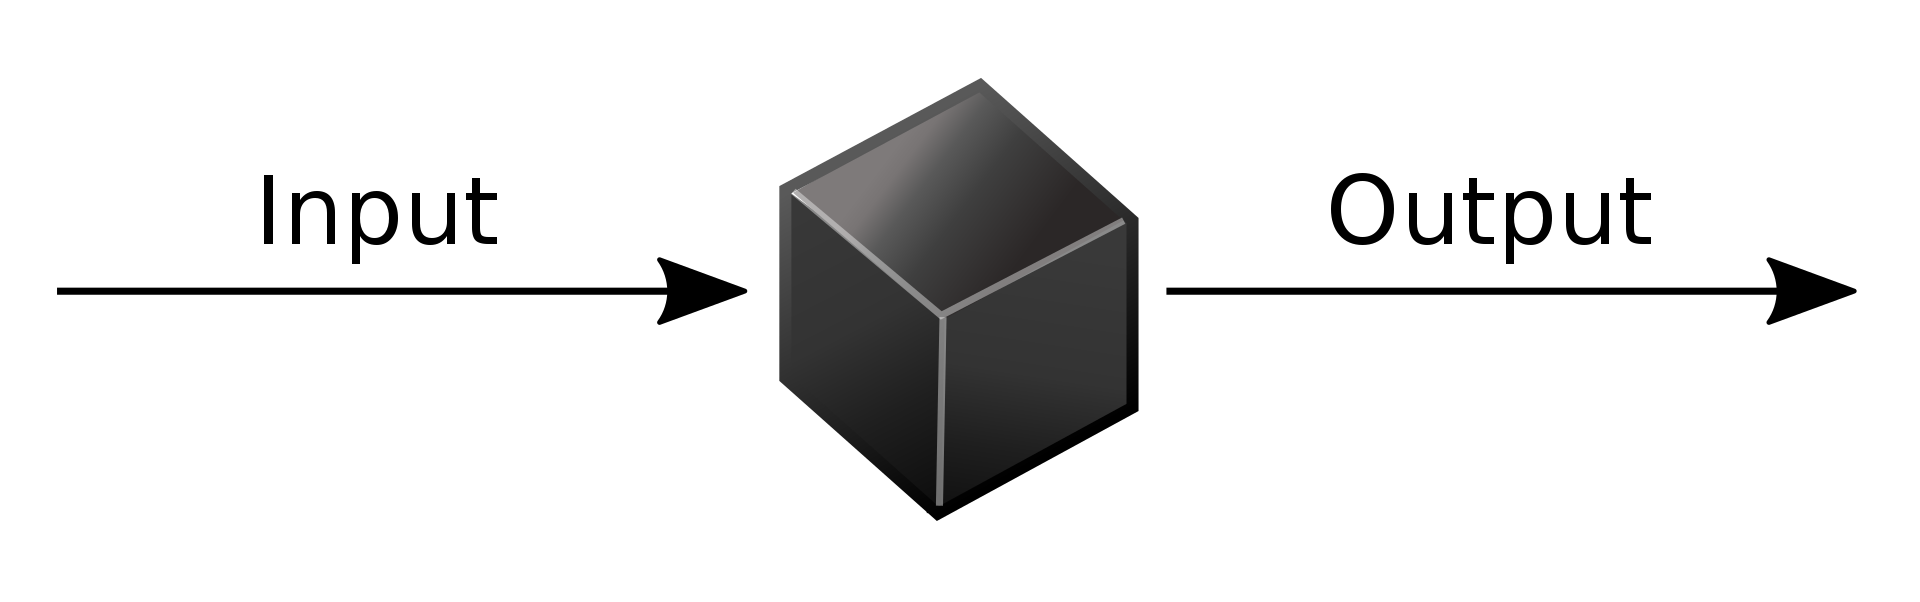 black box graphic